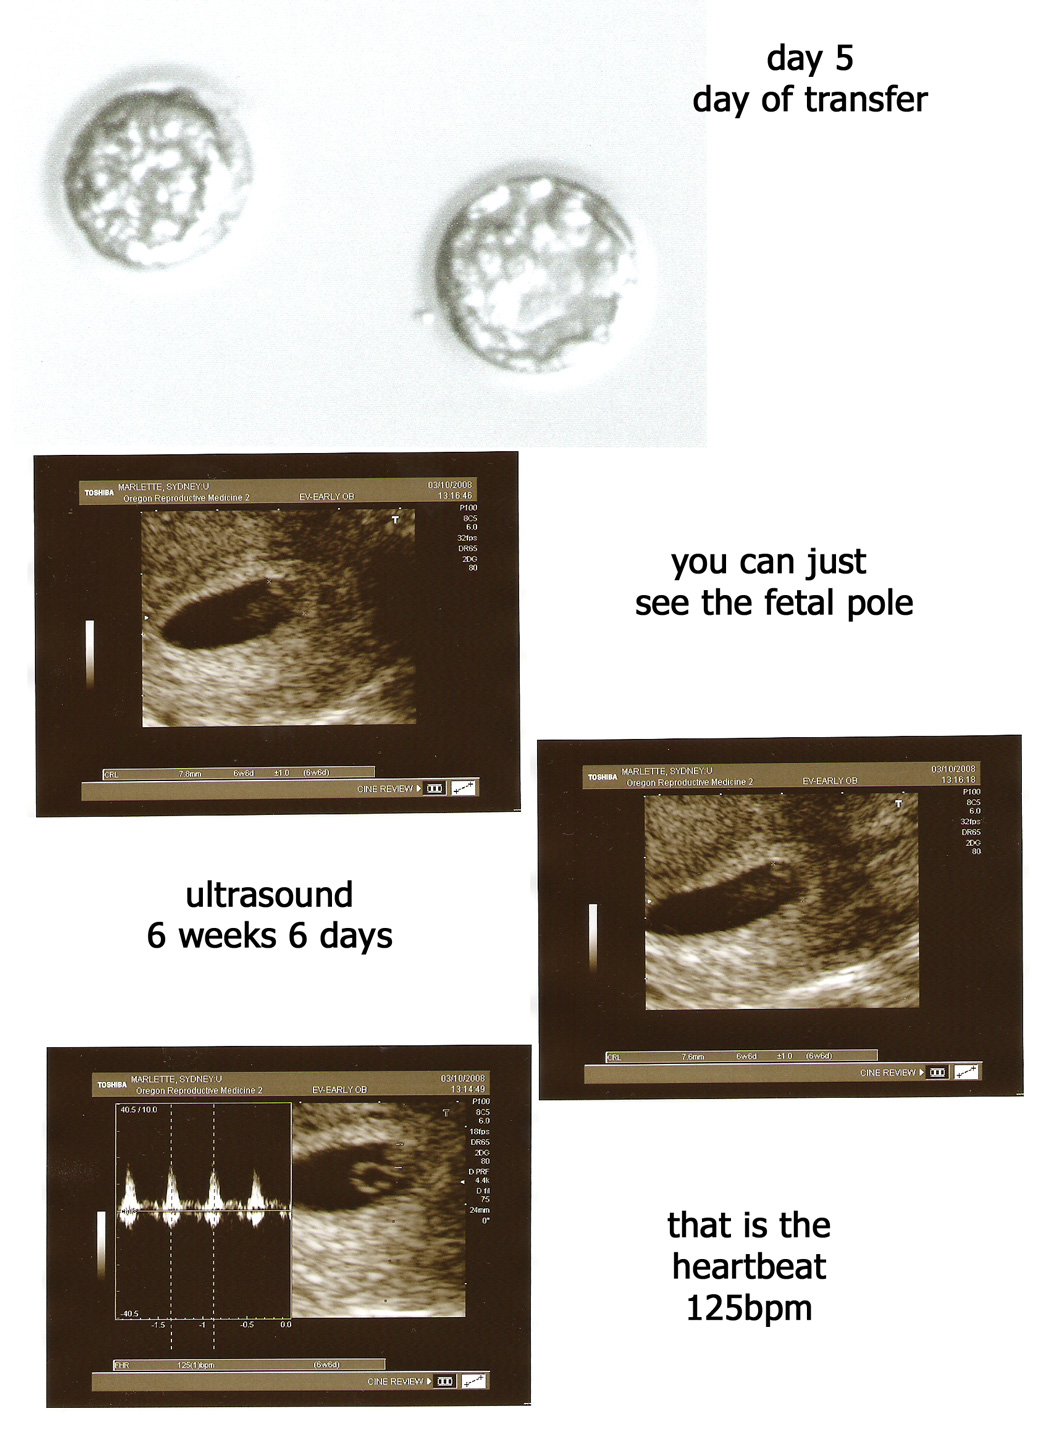 [embryos.jpg]